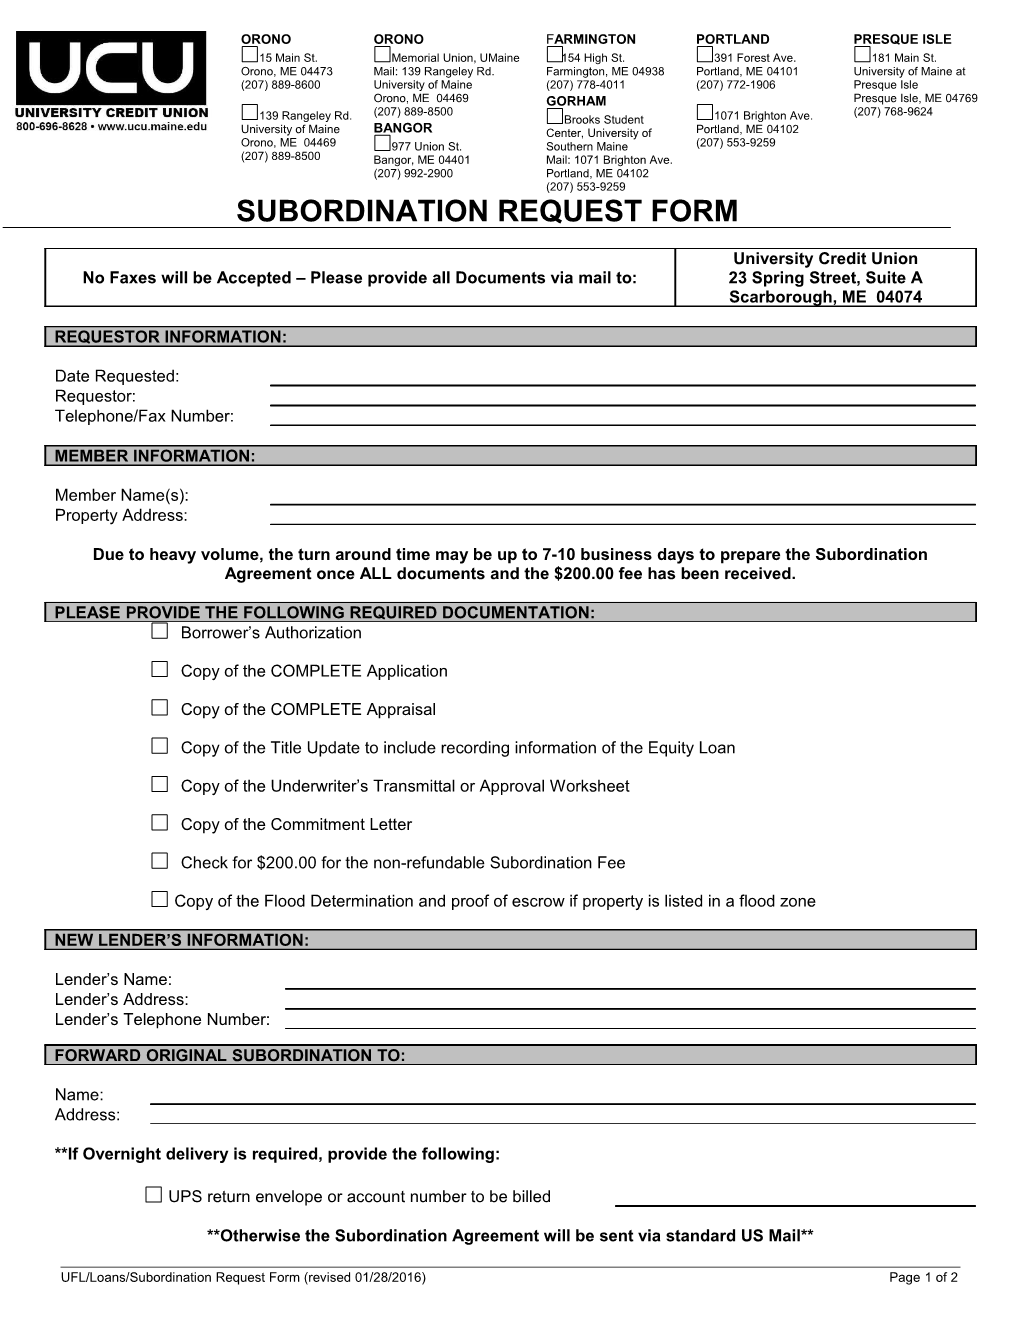 Subordination Request Form